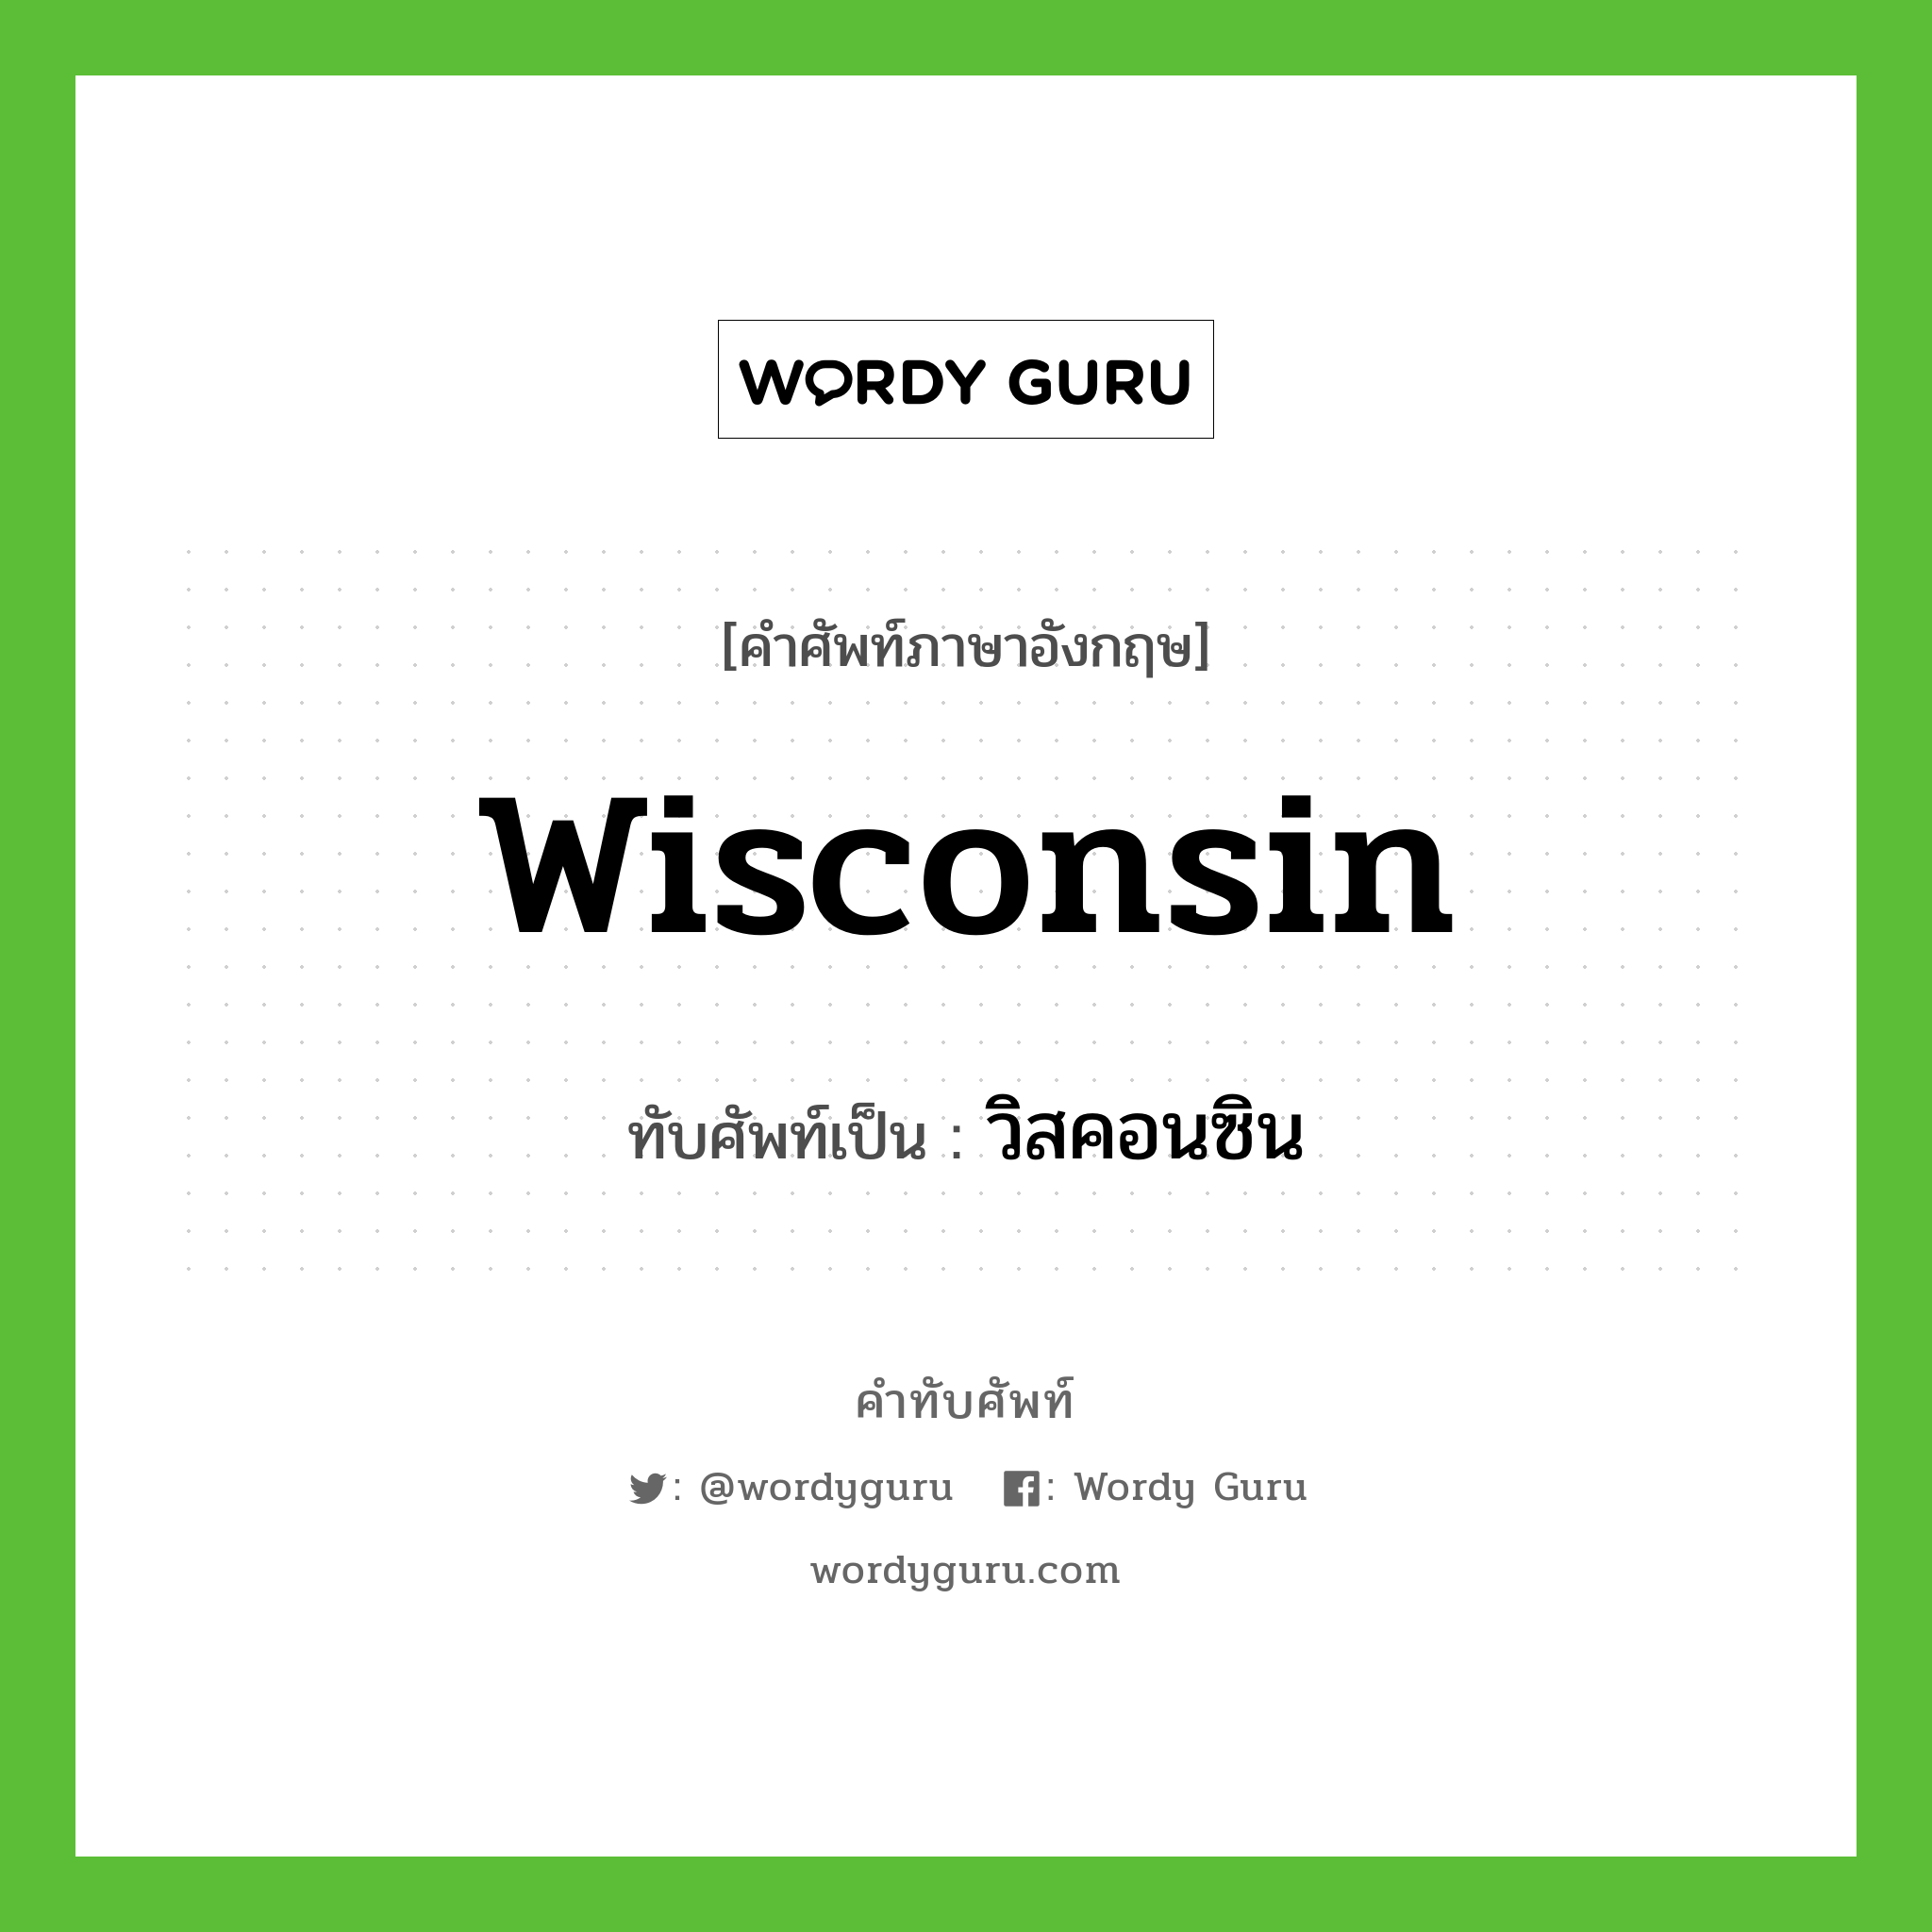 Wisconsin เขียนเป็นคำไทยว่าอะไร?, คำศัพท์ภาษาอังกฤษ Wisconsin ทับศัพท์เป็น วิสคอนซิน